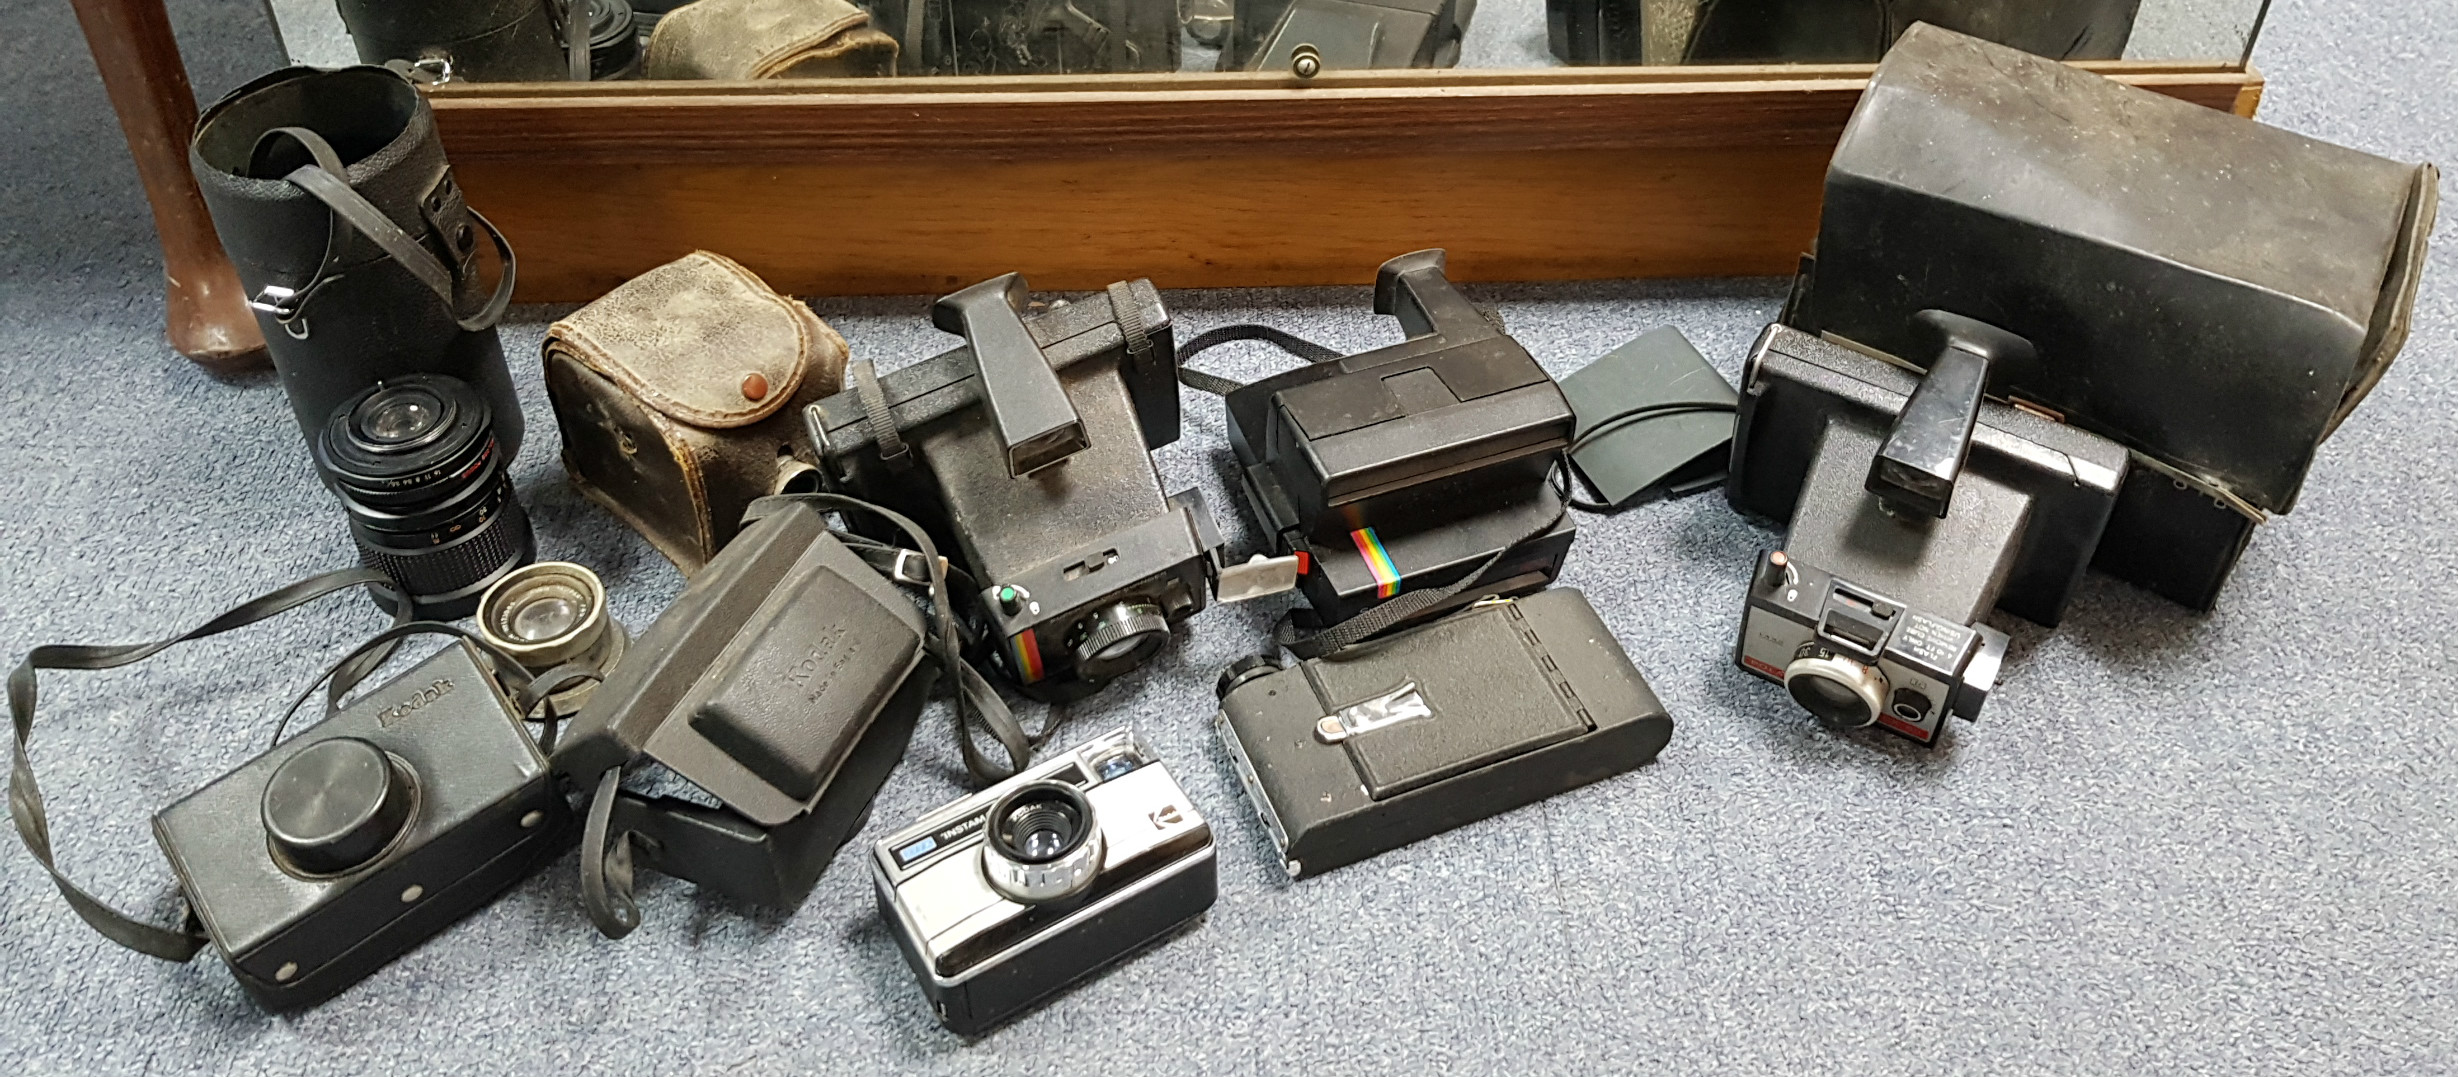 Various cameras & camera accessories.